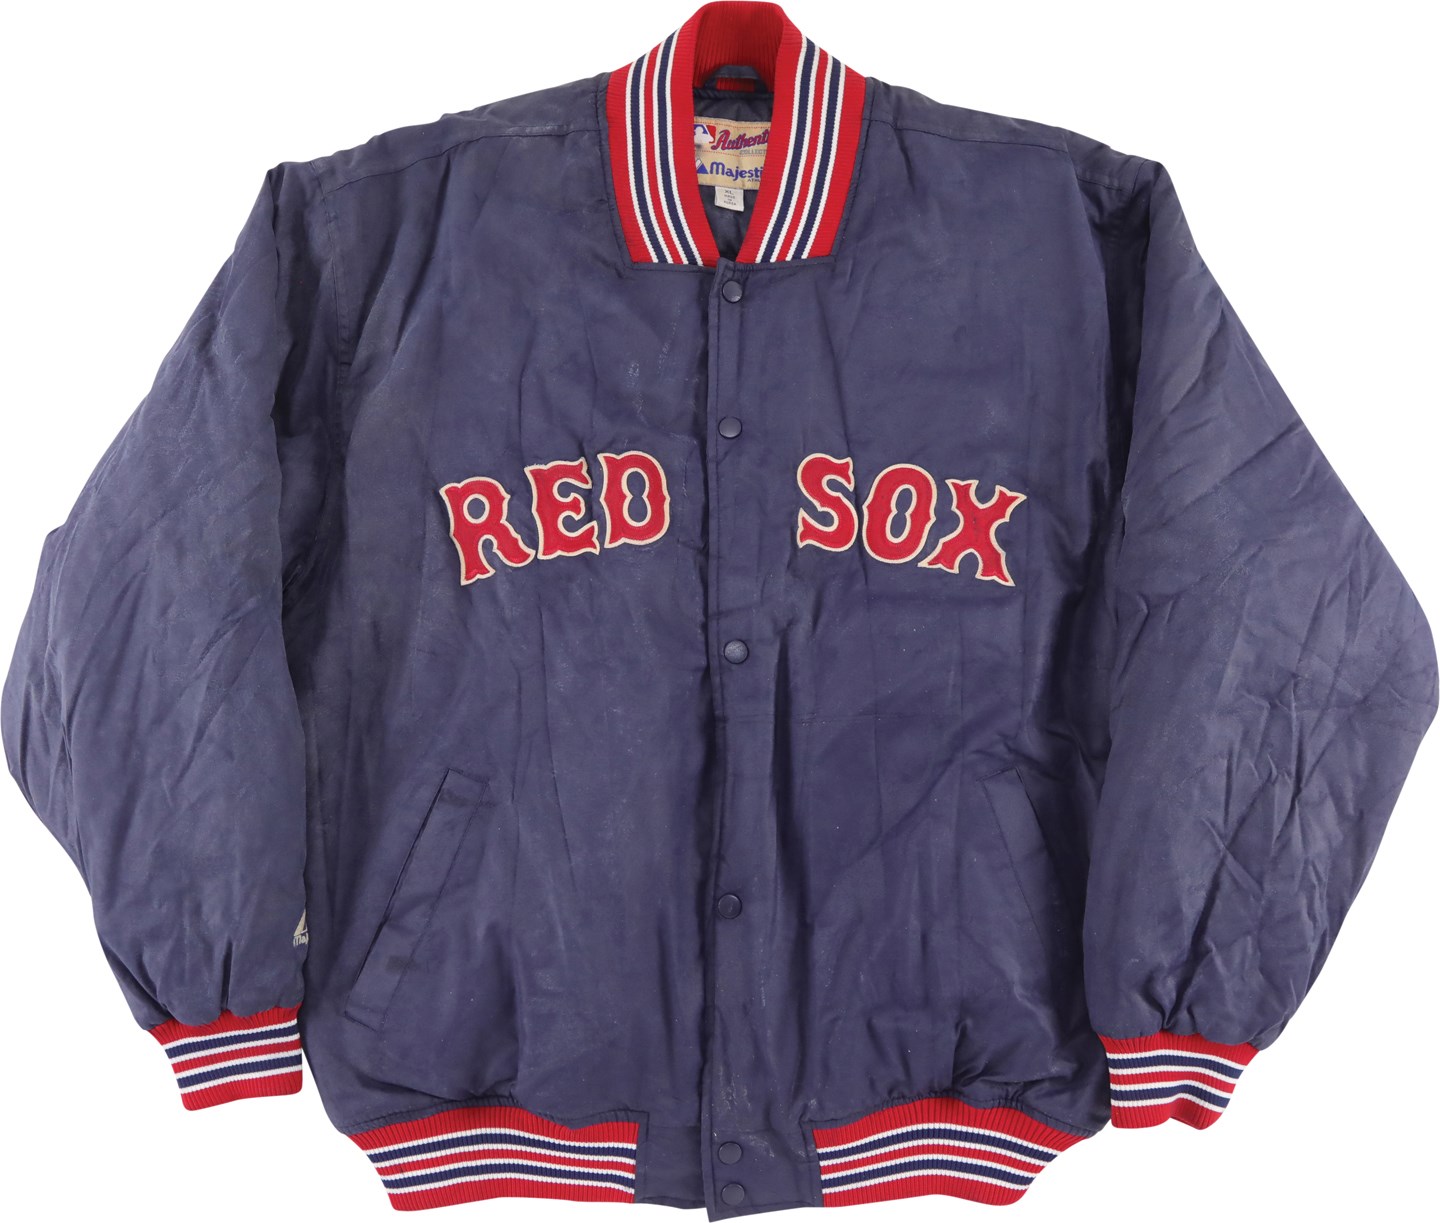 Baseball Equipment - 2000s Trot Nixon Boston Red Sox Game Worn Jacket